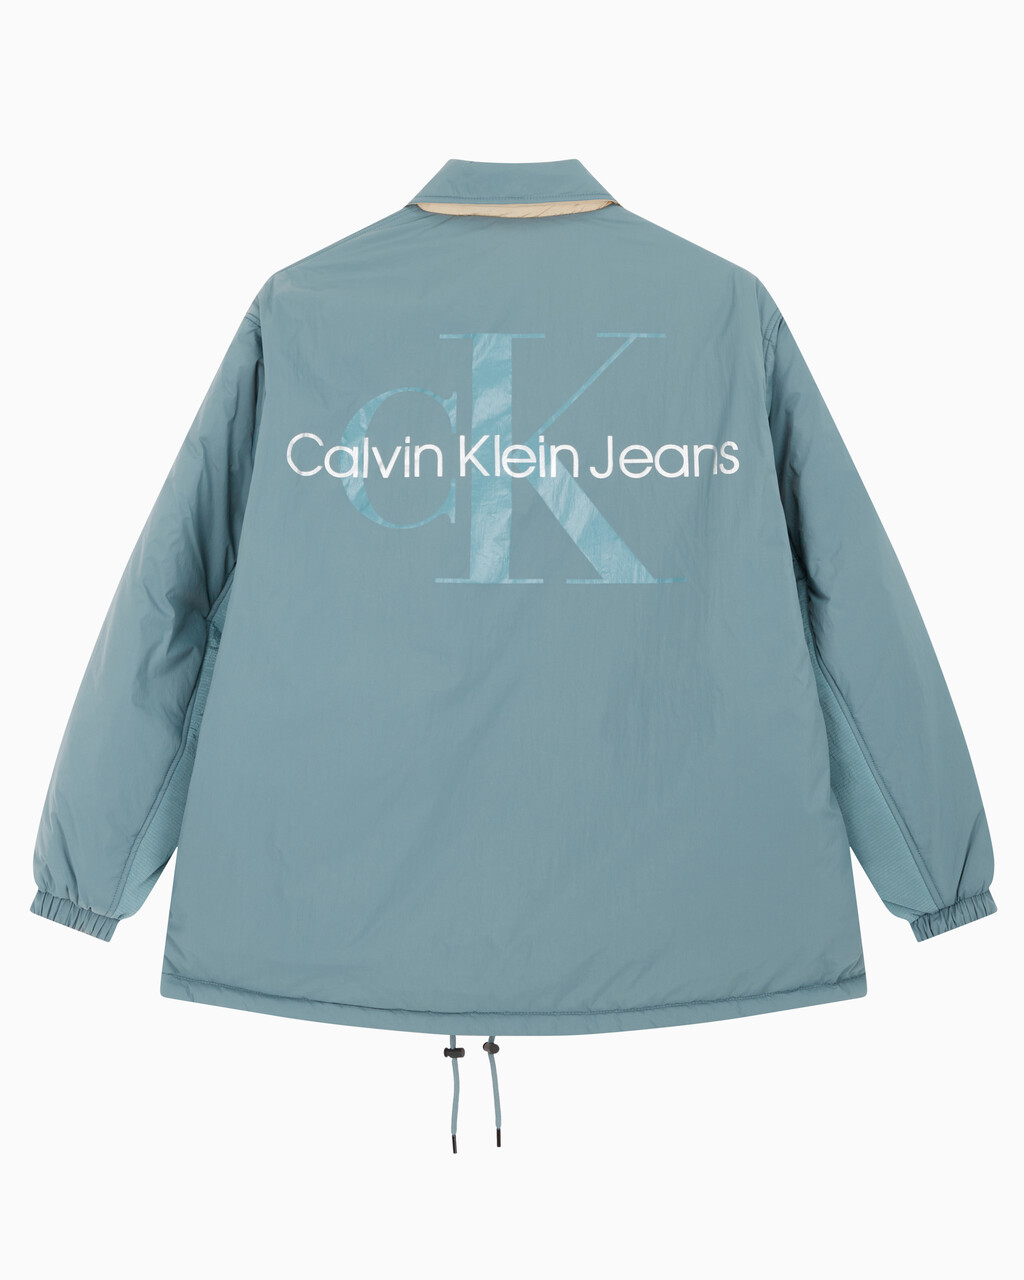 Buy 남성 리버서블 모노그램 로고 숏 코트 스케이터 자켓 in color GOBLIN BLUE